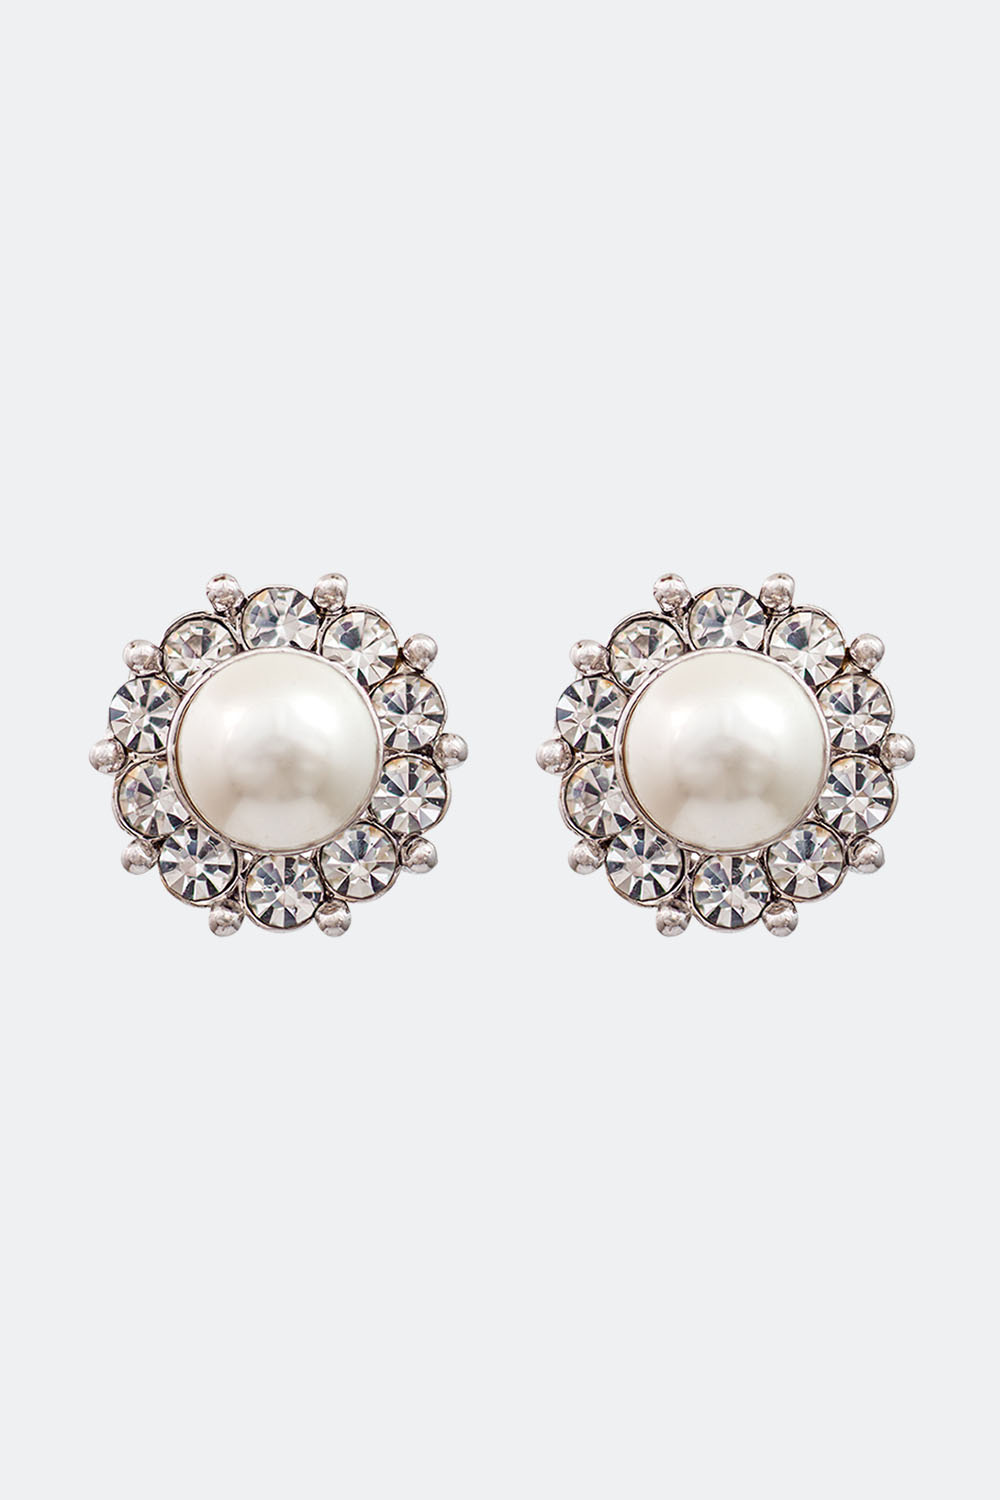 Miss Sofia Pearl earrings - Créme